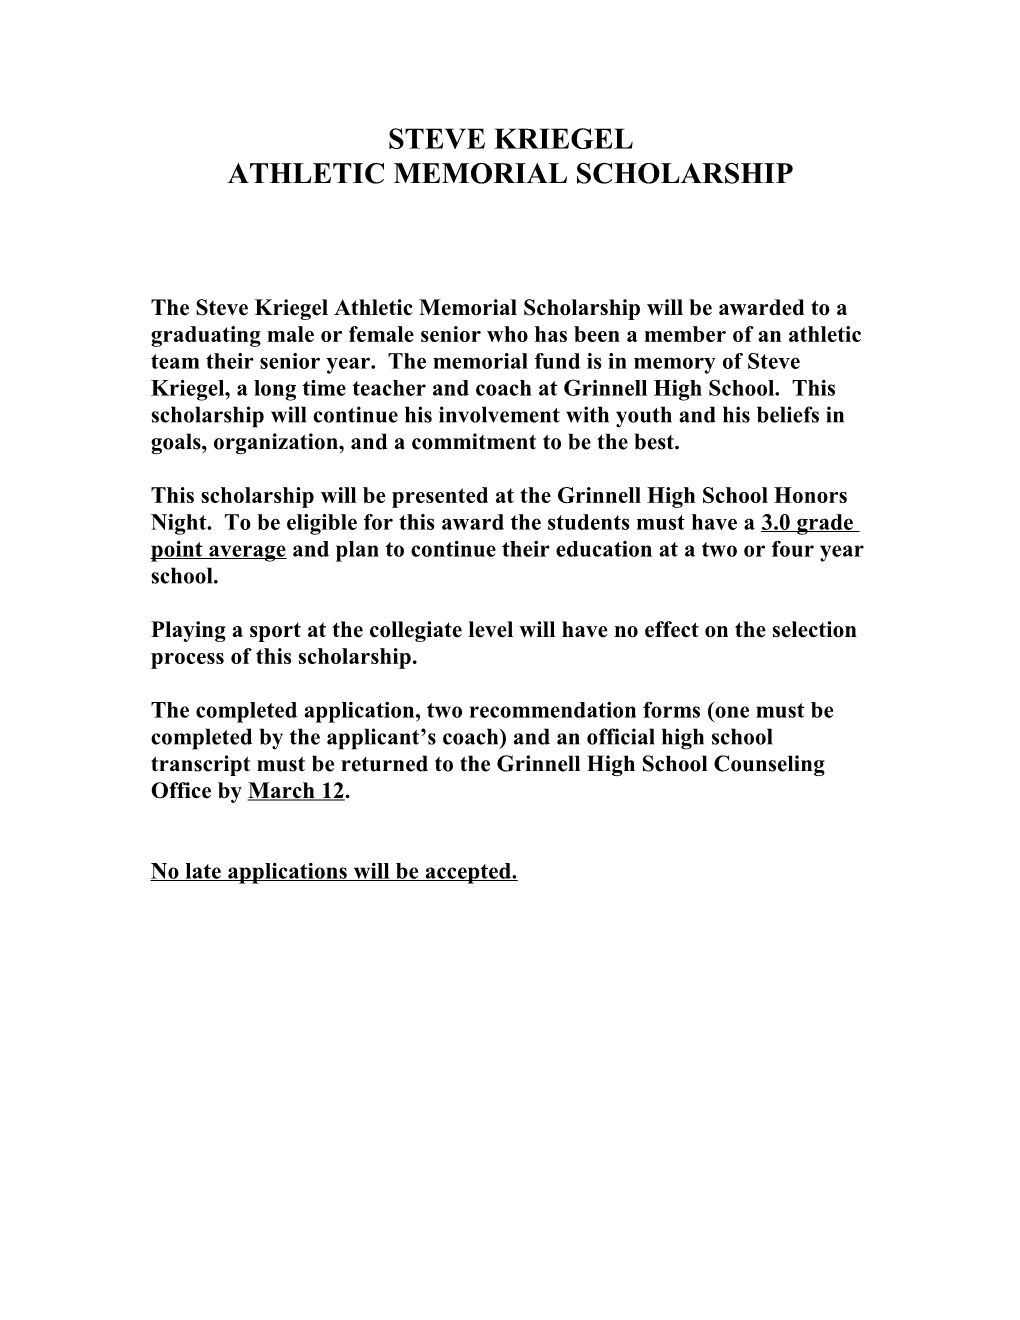 Athletic Memorial Scholarship